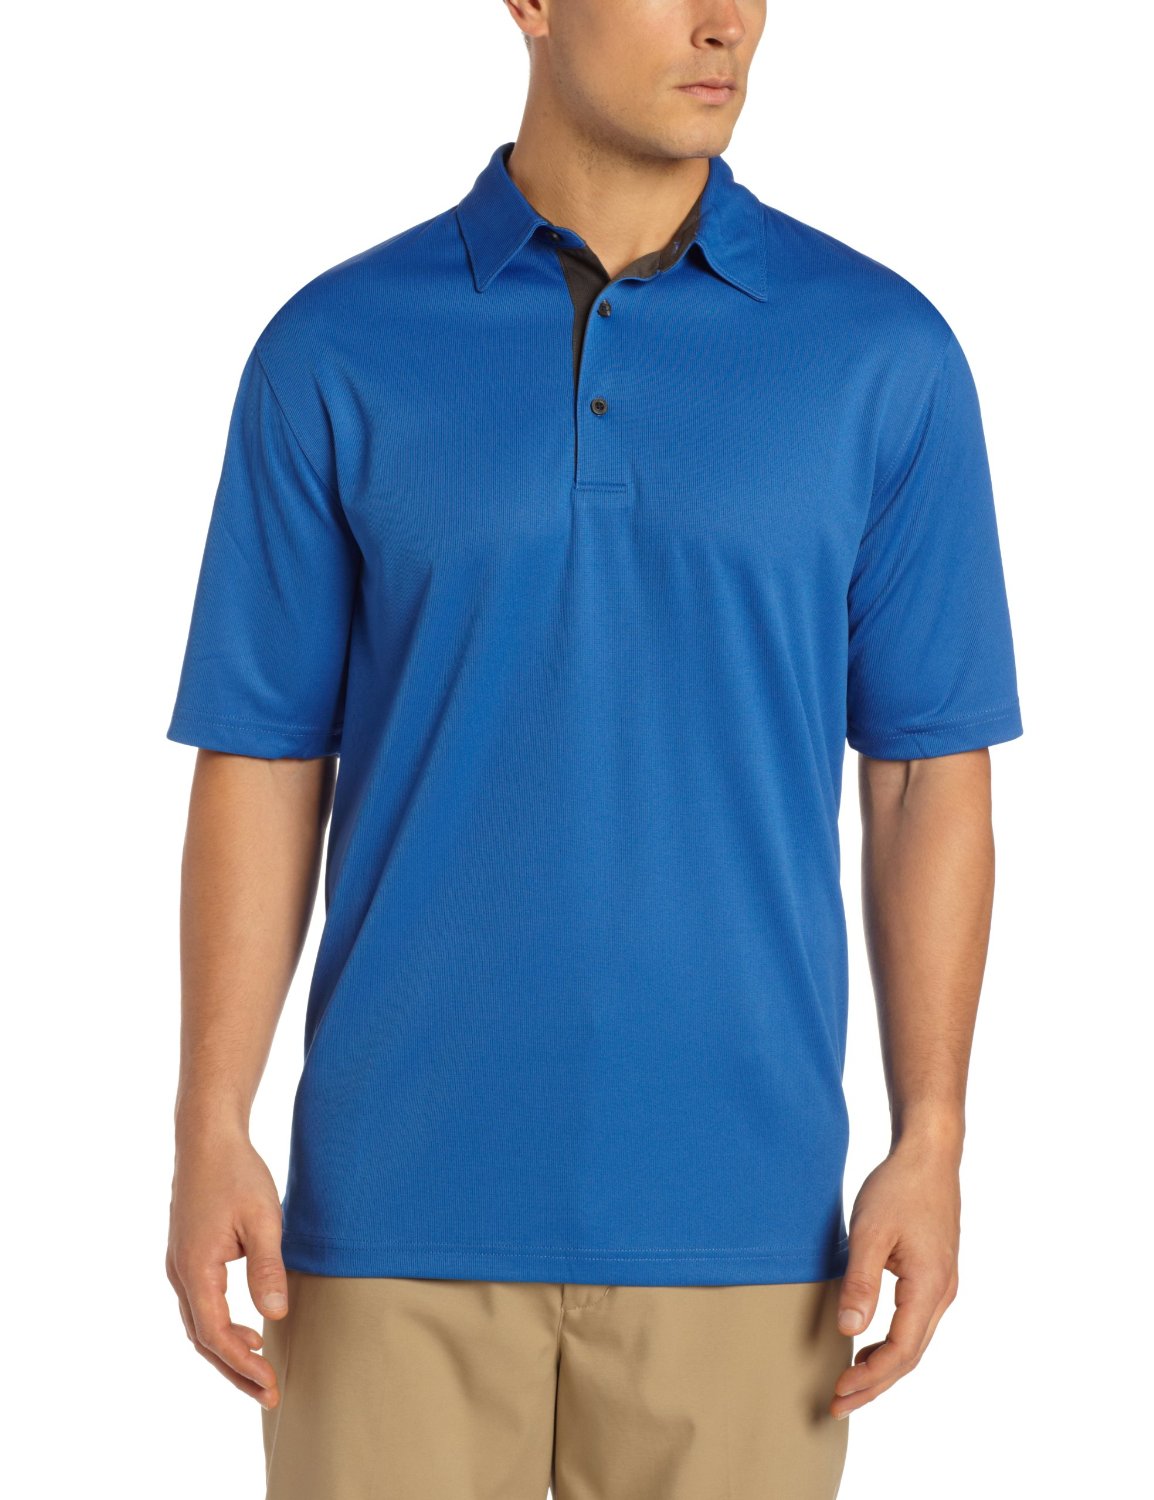 Greg Norman Mens SorbTek Honeycomb Solid Golf Polo Shirts